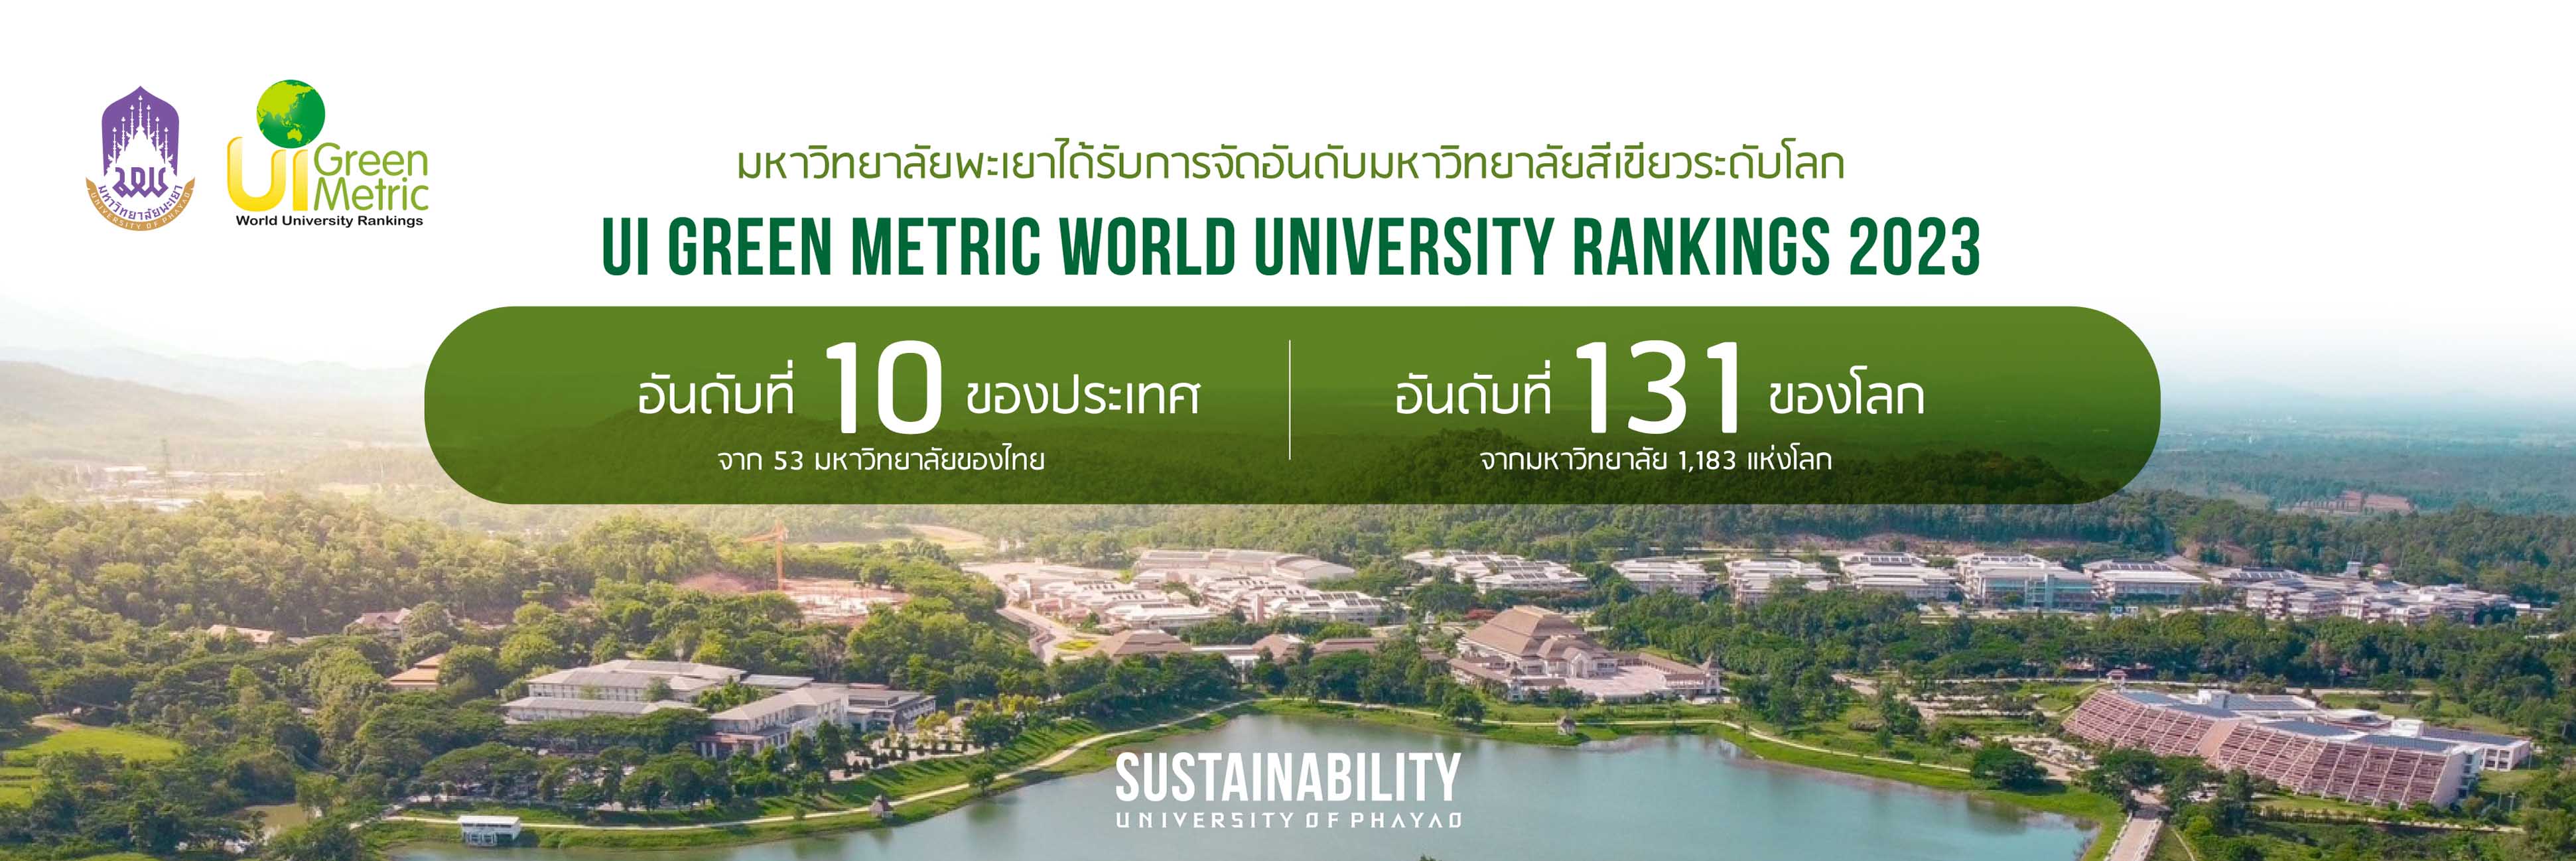 UI Green Metric World University Ranking 2023